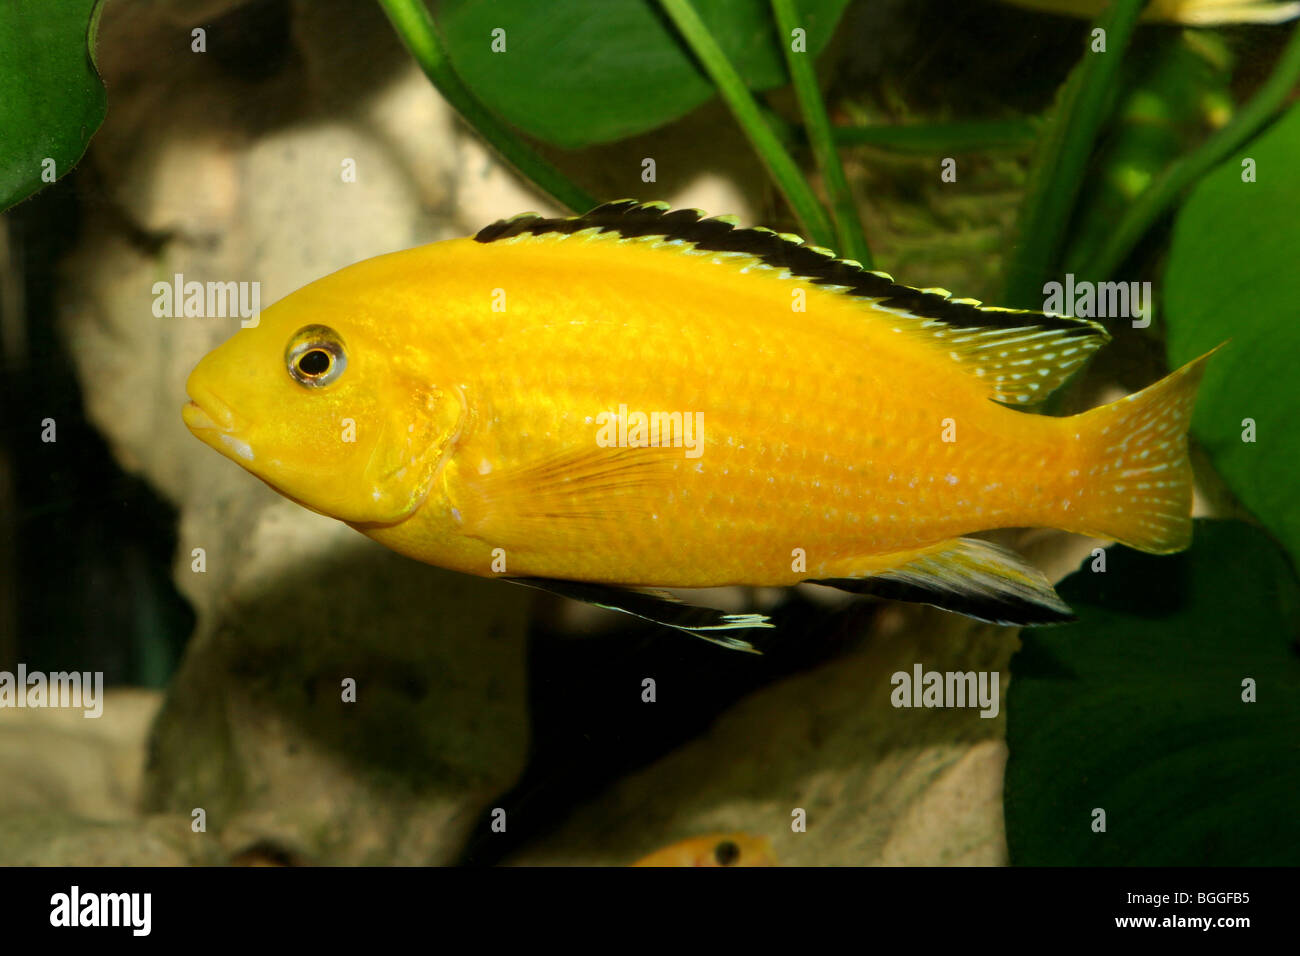 Electric Yellow Cichlid (Labidochromis caeruleus). Stock Photo